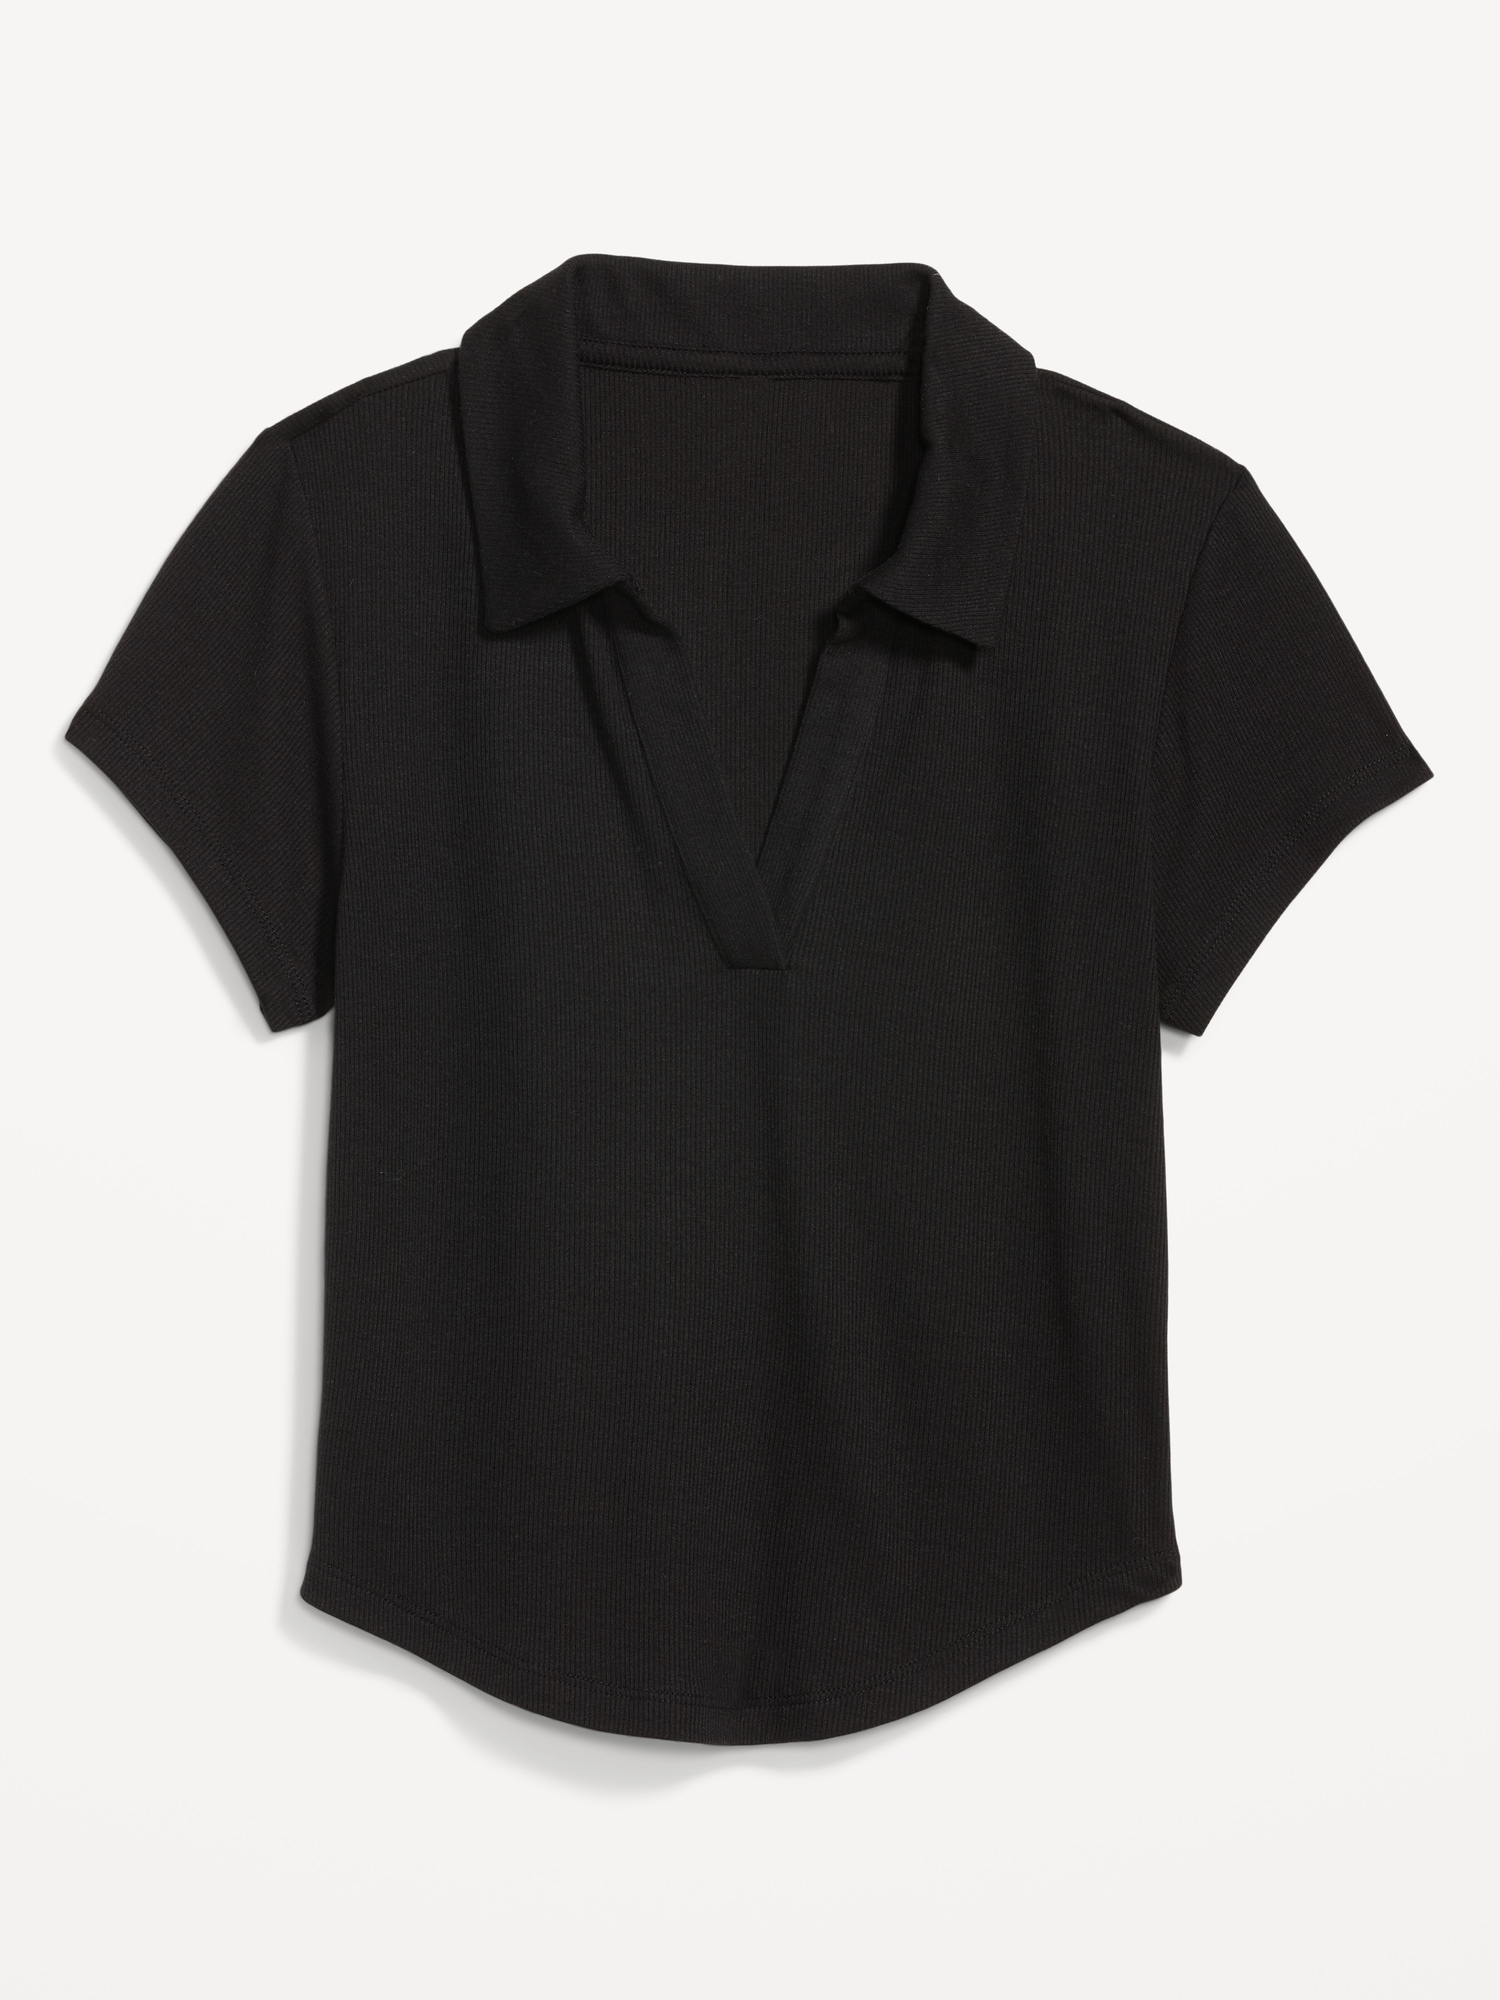 UltraLite Rib-Knit Cropped Polo Shirt for Women